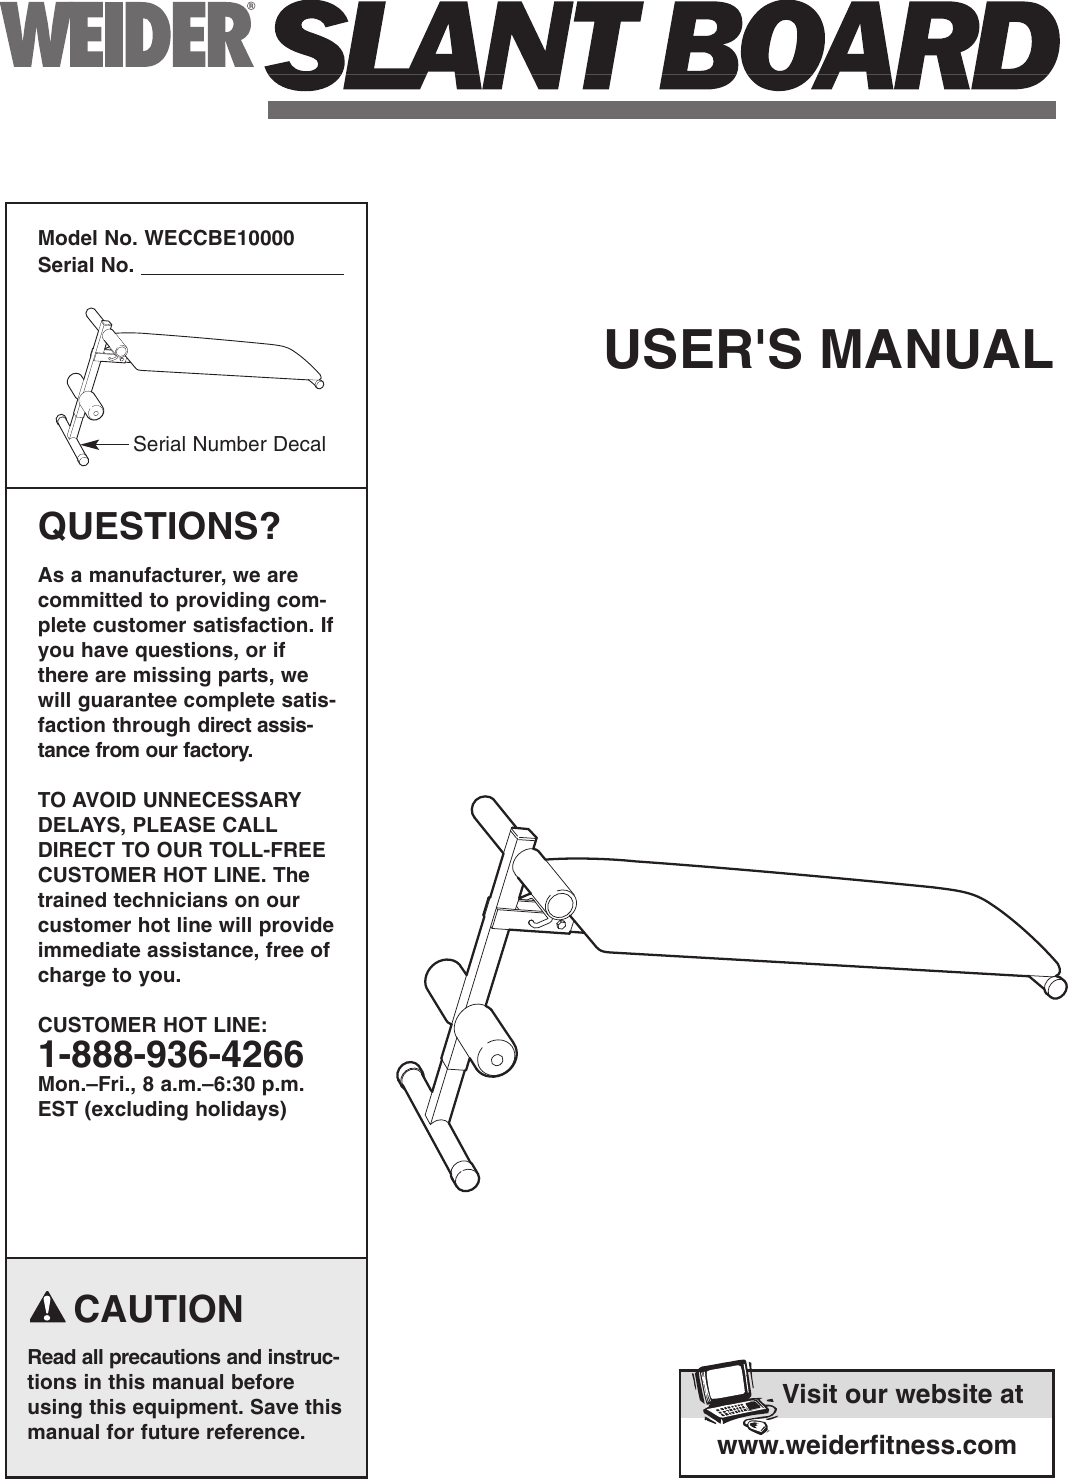 Page 1 of 12 - Weider Weider-Slant-Board-Bench-Weccbe1000-Users-Manual- *WECCBE10000-165877(CEN)  Weider-slant-board-bench-weccbe1000-users-manual